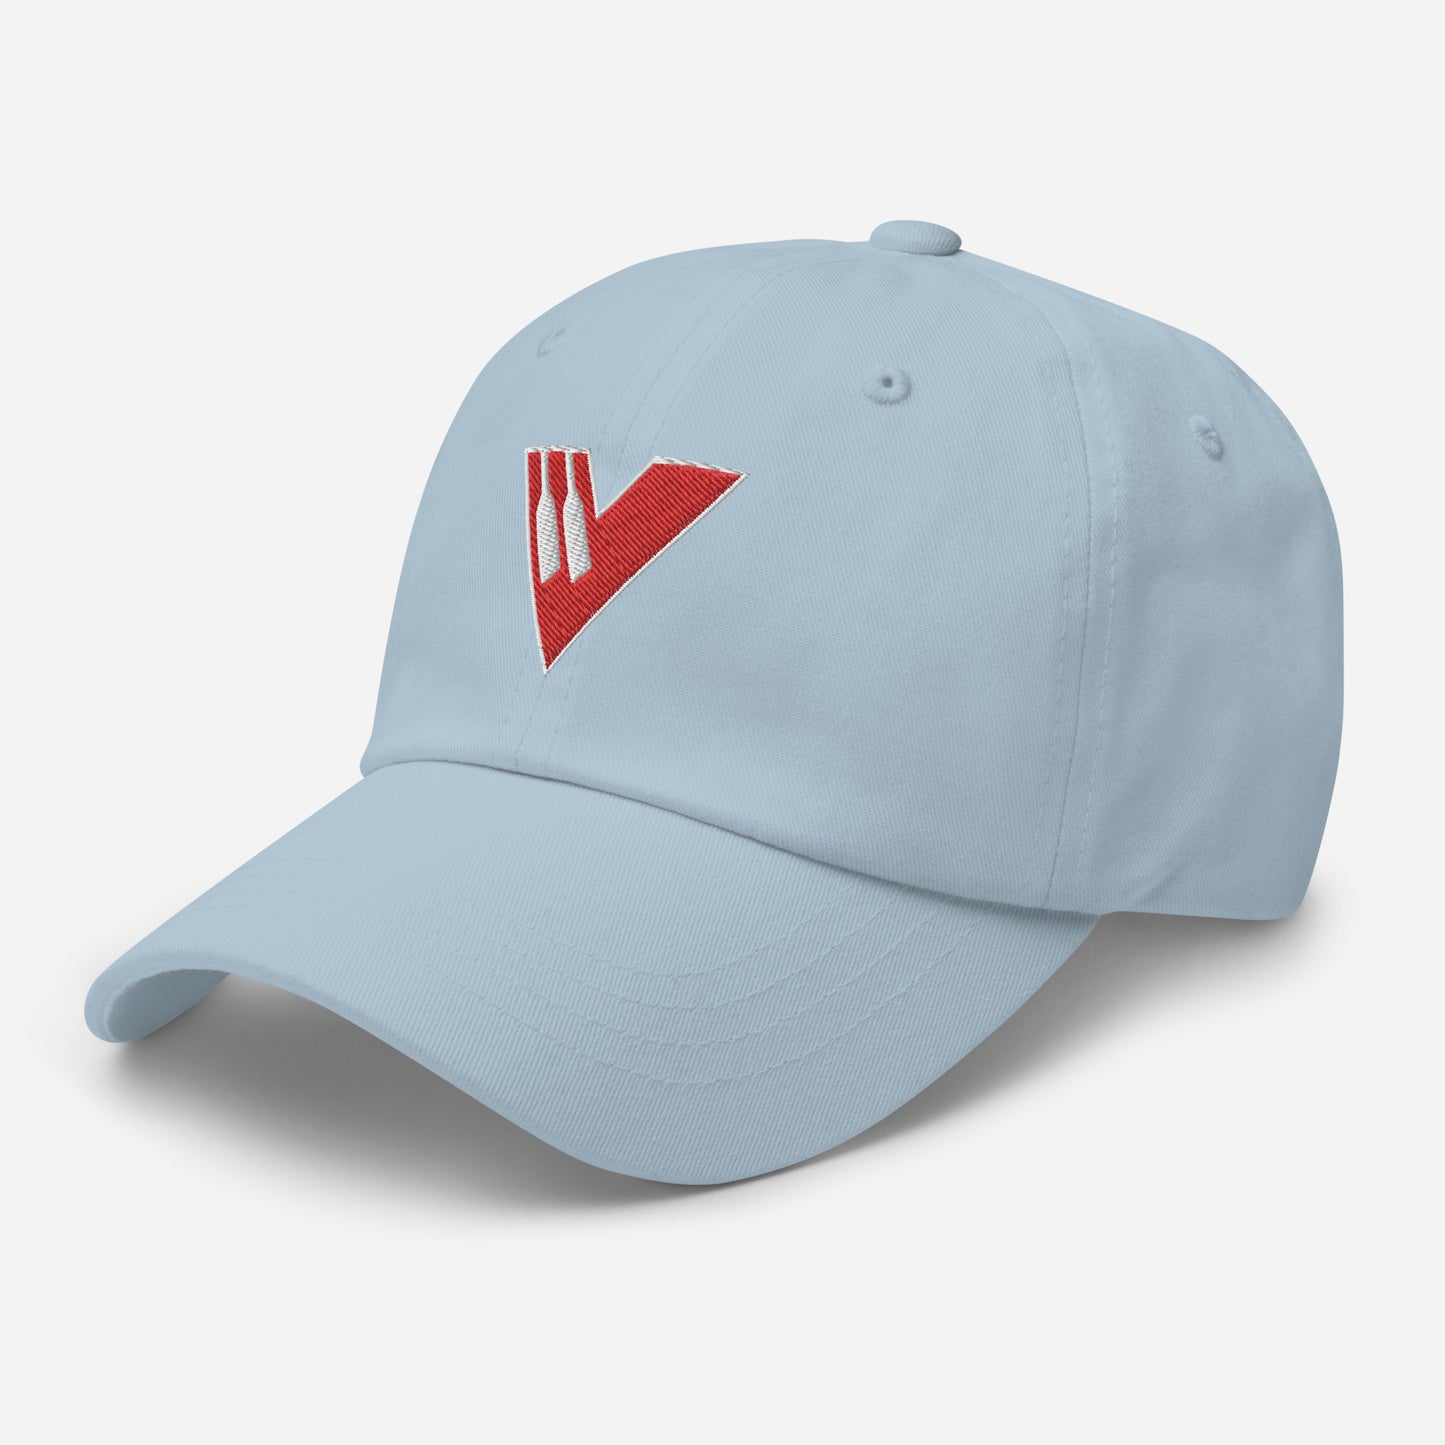 VCBP Dad hat